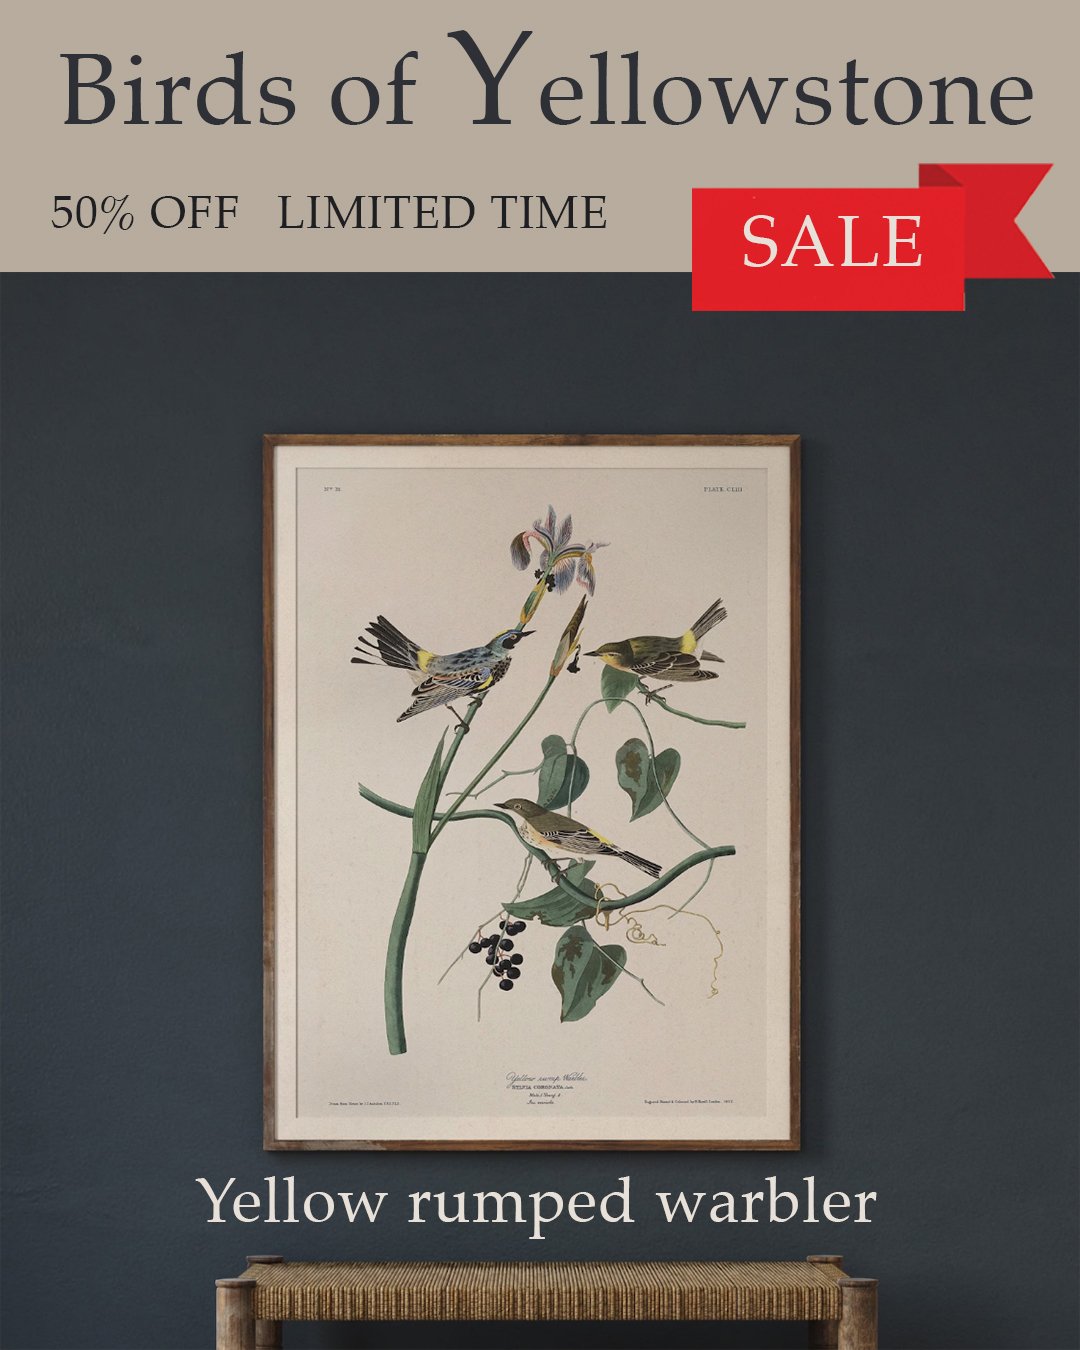 audubon yellow rumped warbler.jpg